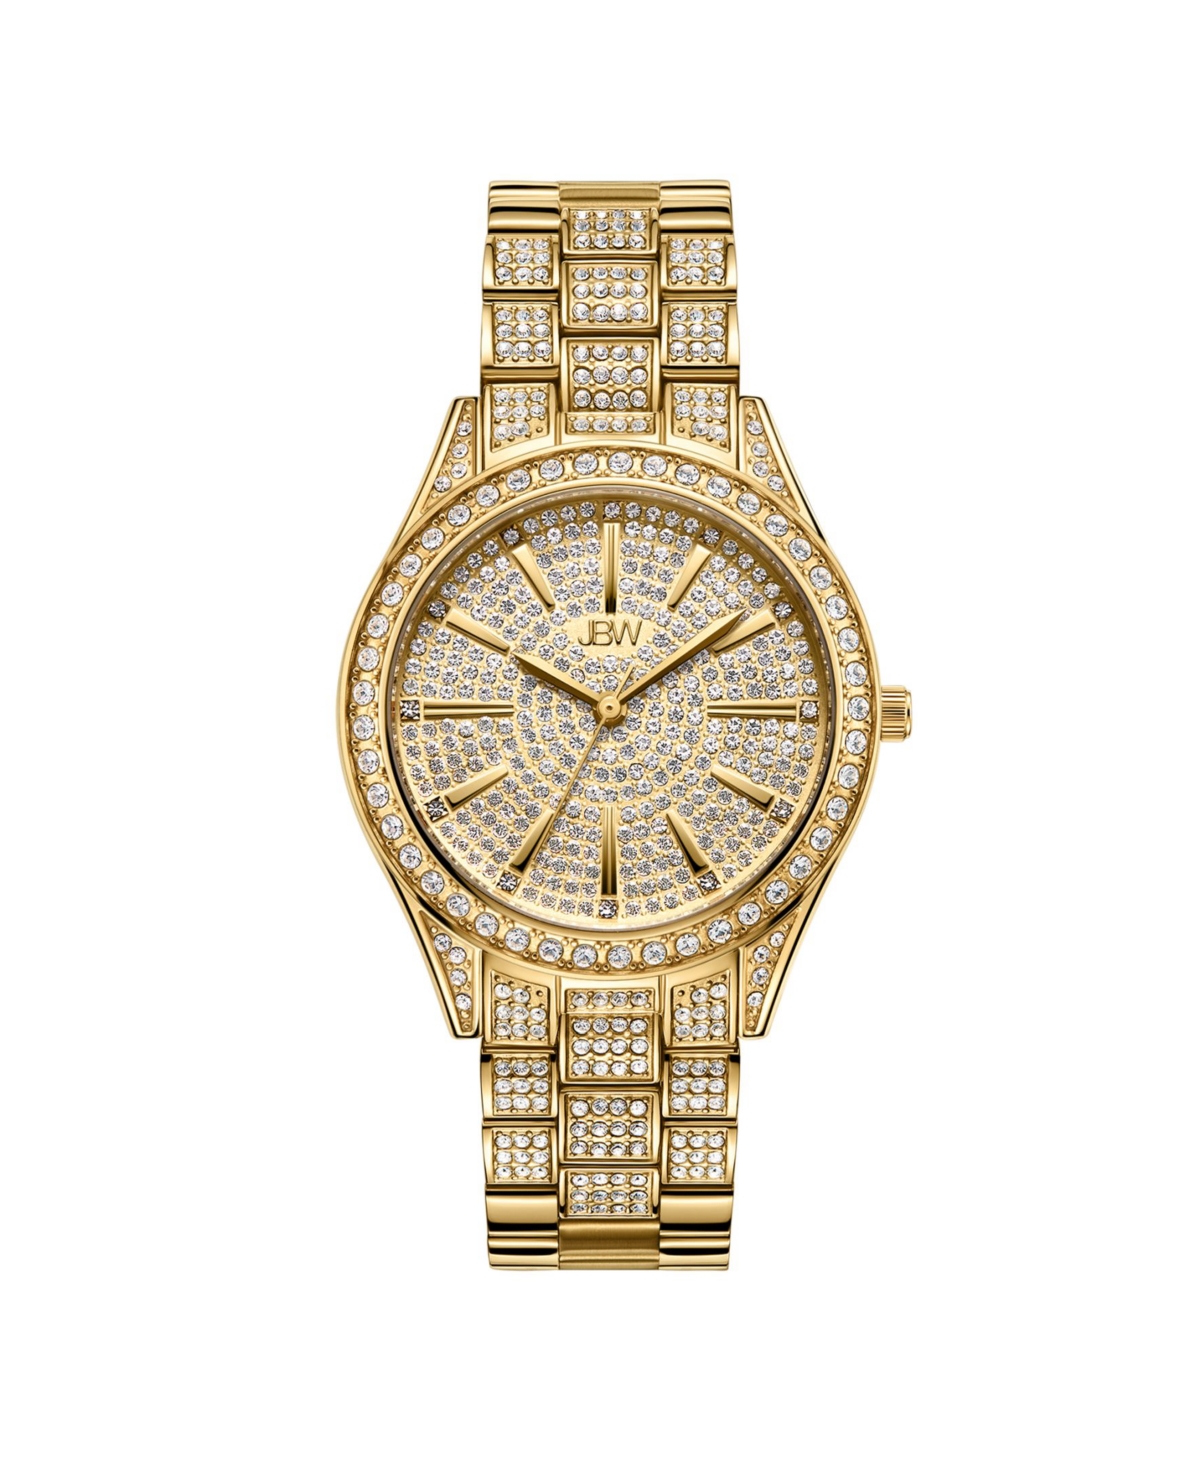 Jbw Women's Cristal Diamond (1/8 ct. t.w.) Watch in 18k Gold-plated Stainless-steel Watch 38mm